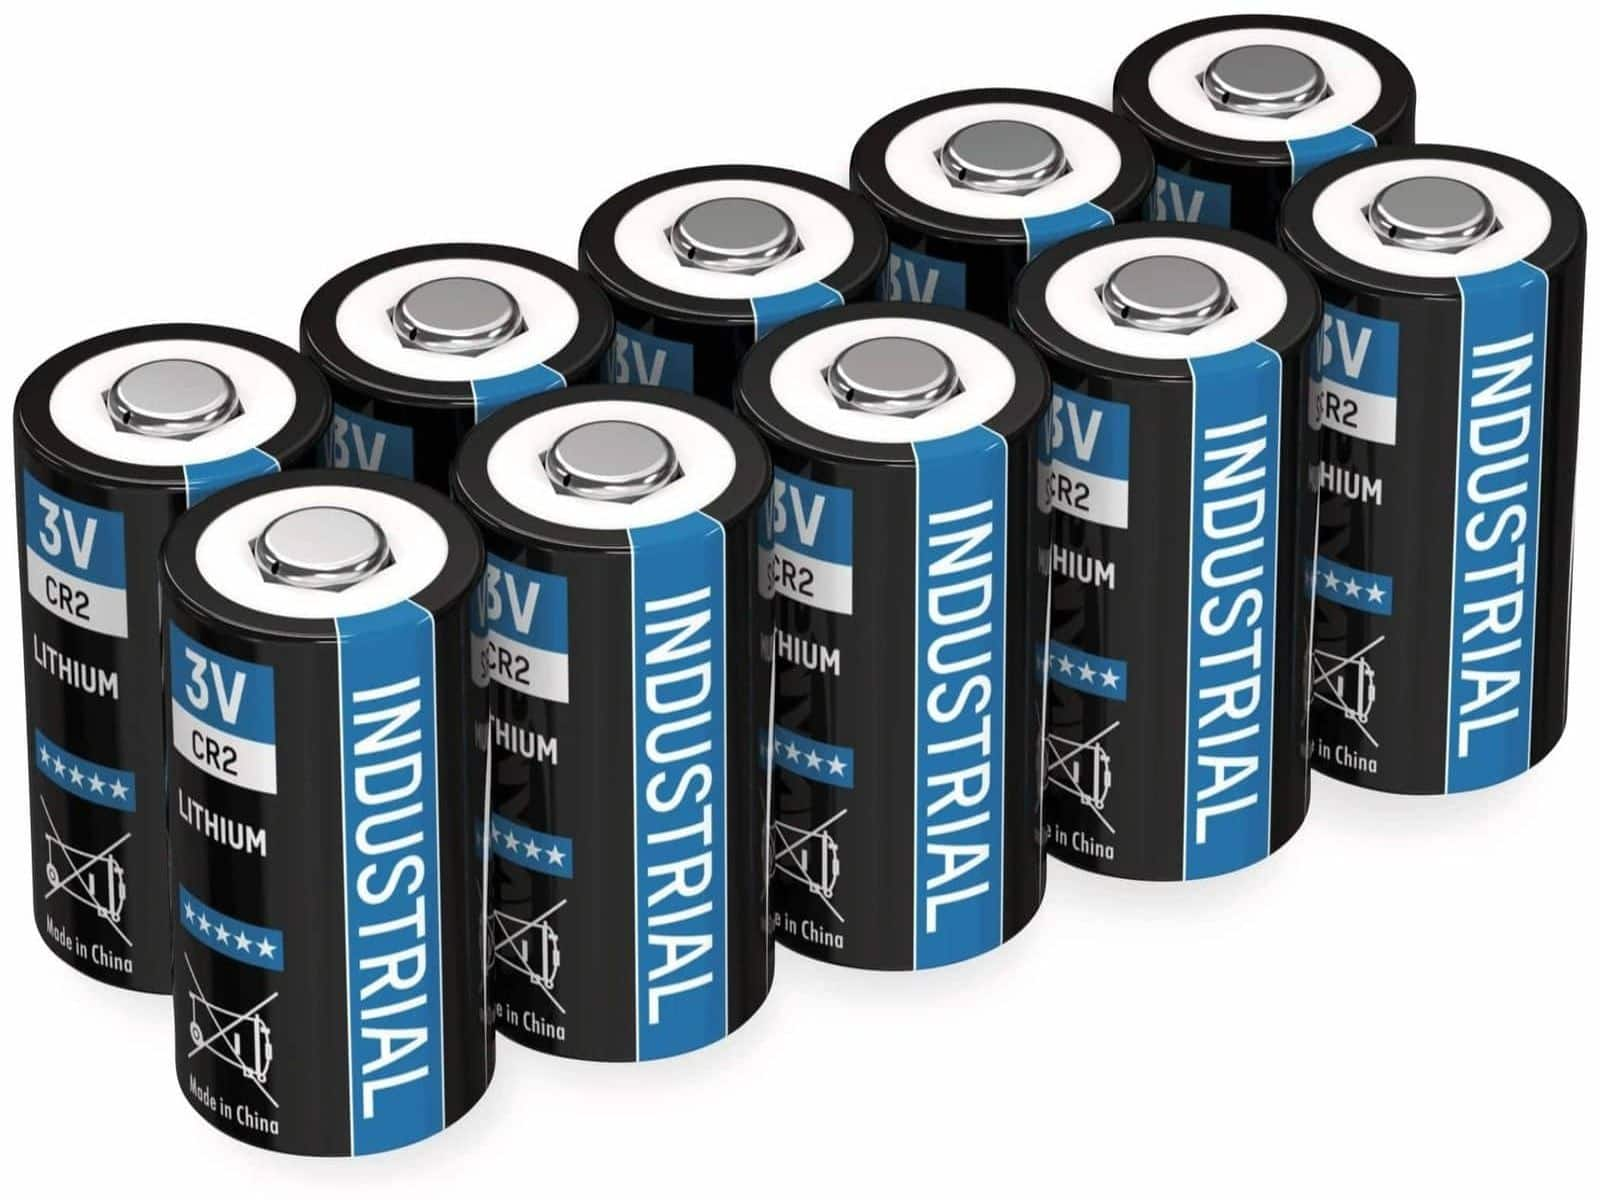 ANSMANN ANSMANN Strom / Licht Lithium Photobatterie Batterien Batterien Energie / CR2 3V 5020021